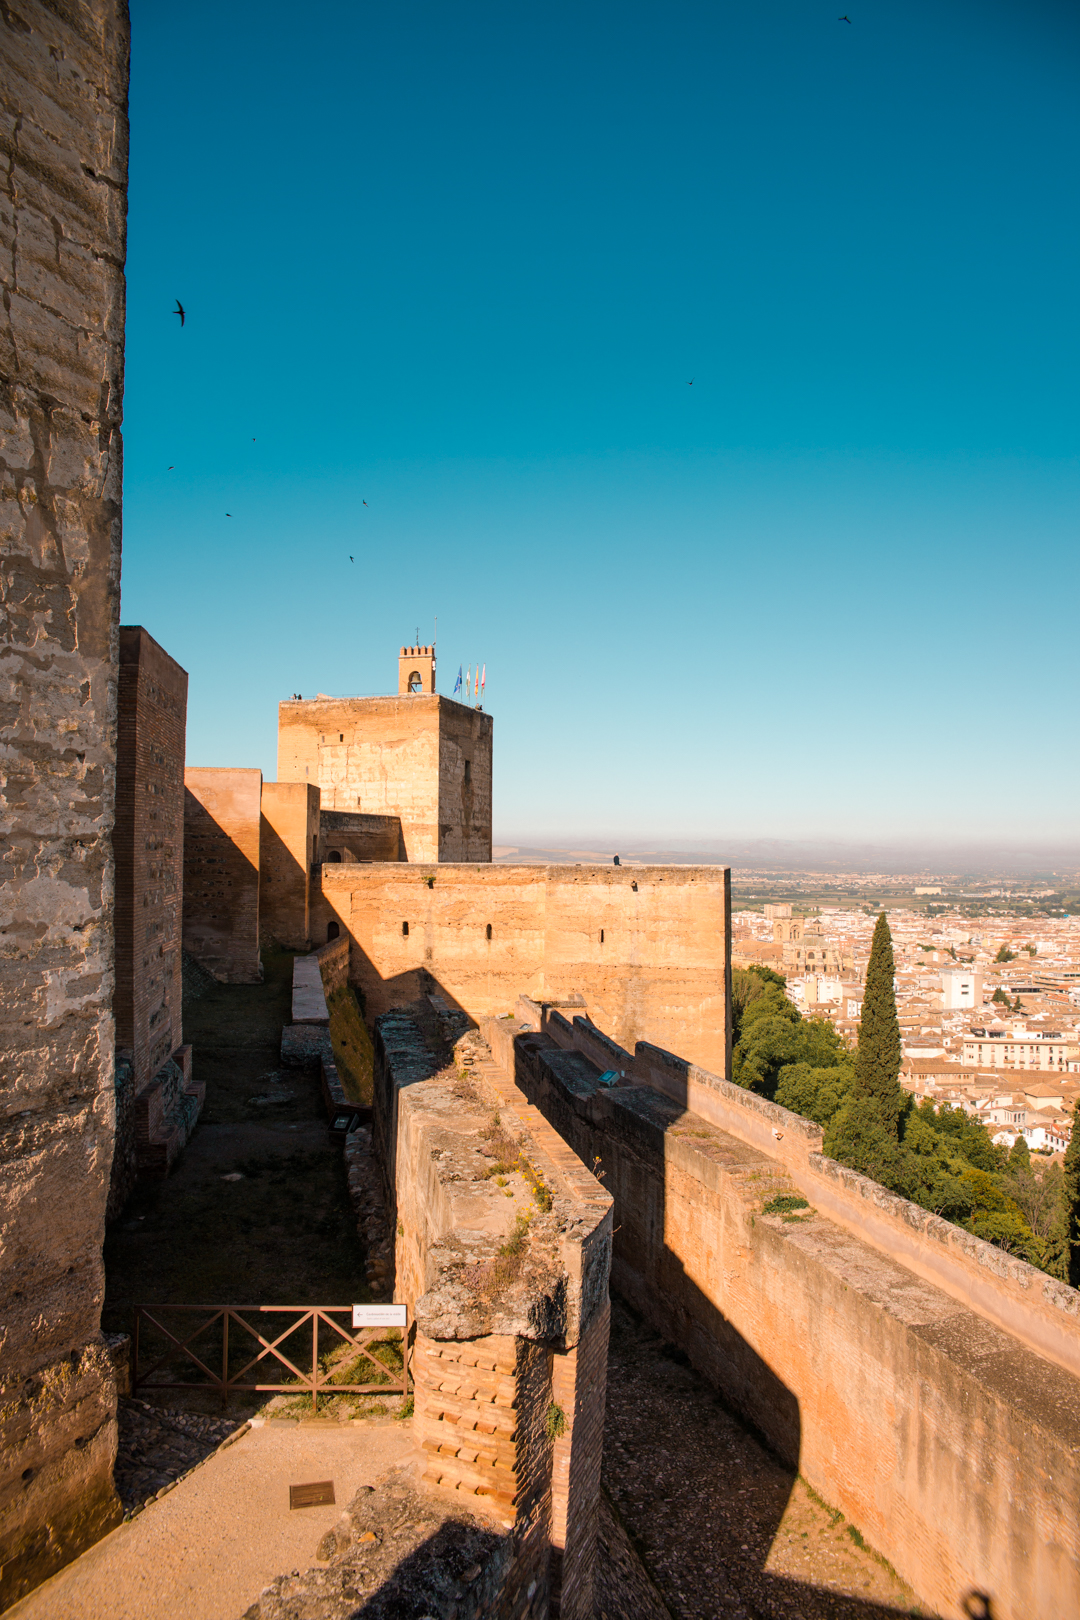 The Alcazar of Granada